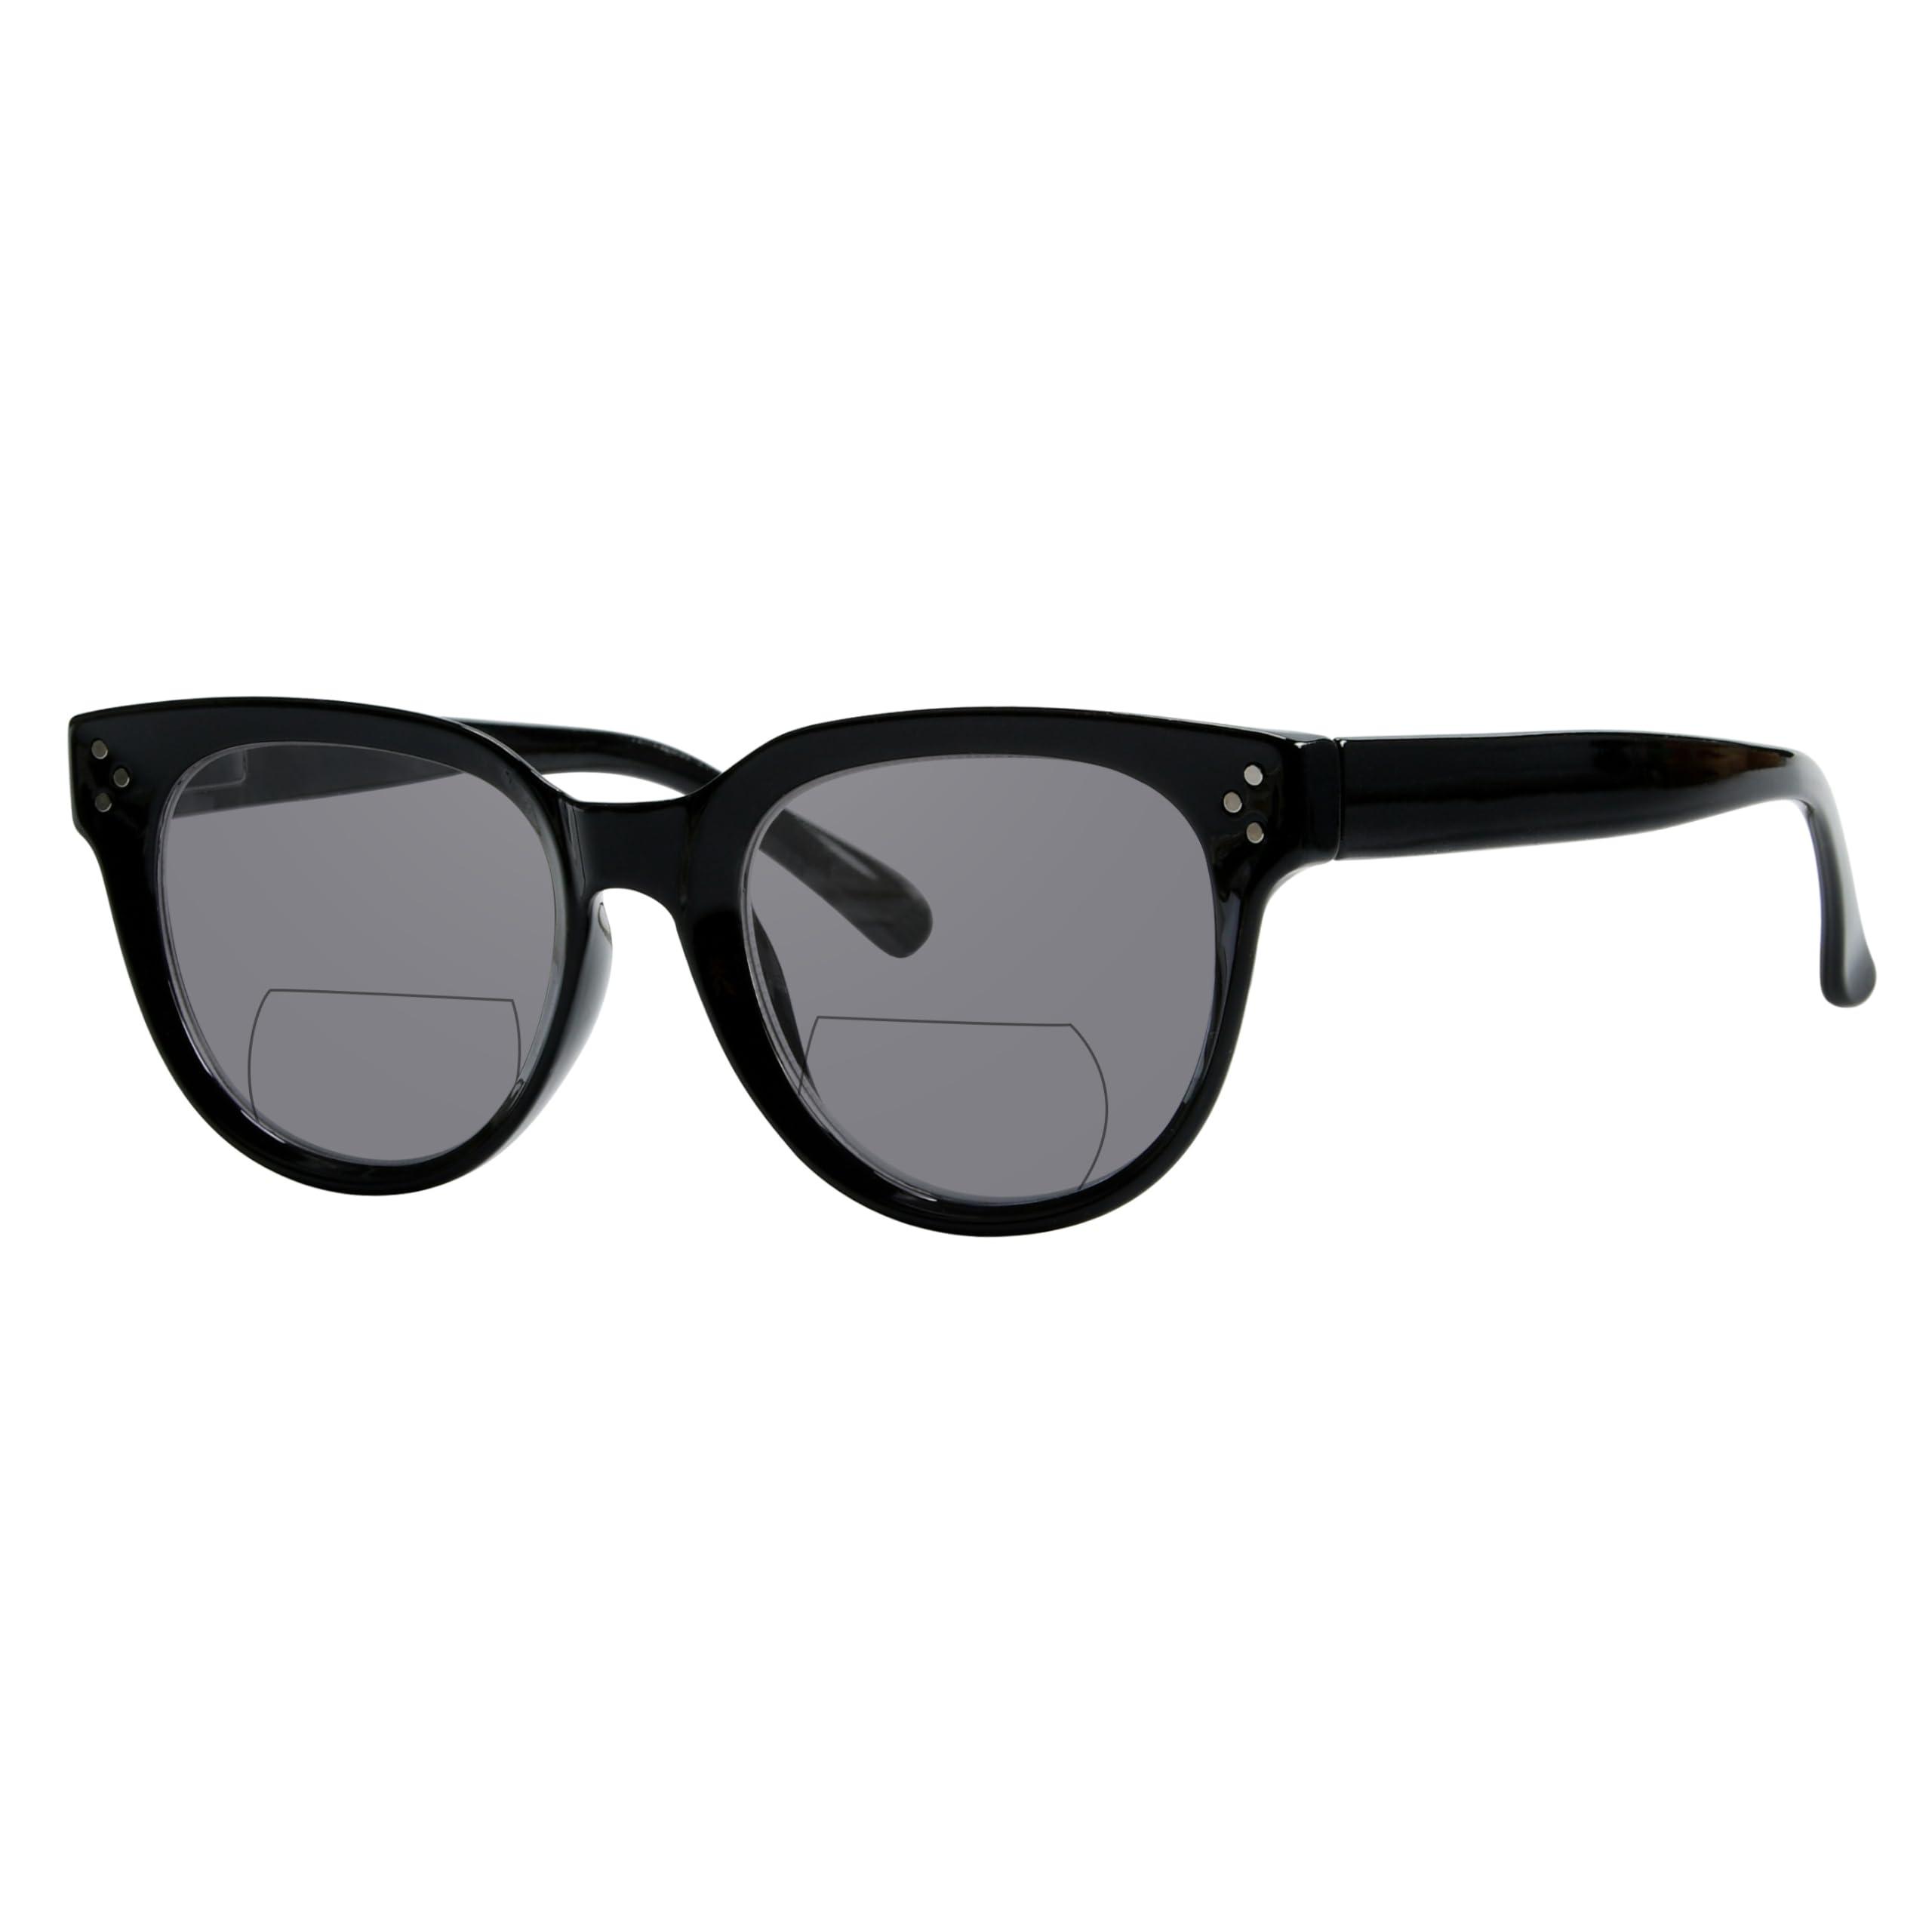 Eyekepper Bifocal Glasses for Women Reading under the Sun Stylish Bifocal Readers Tinted Lens - Black +3.00